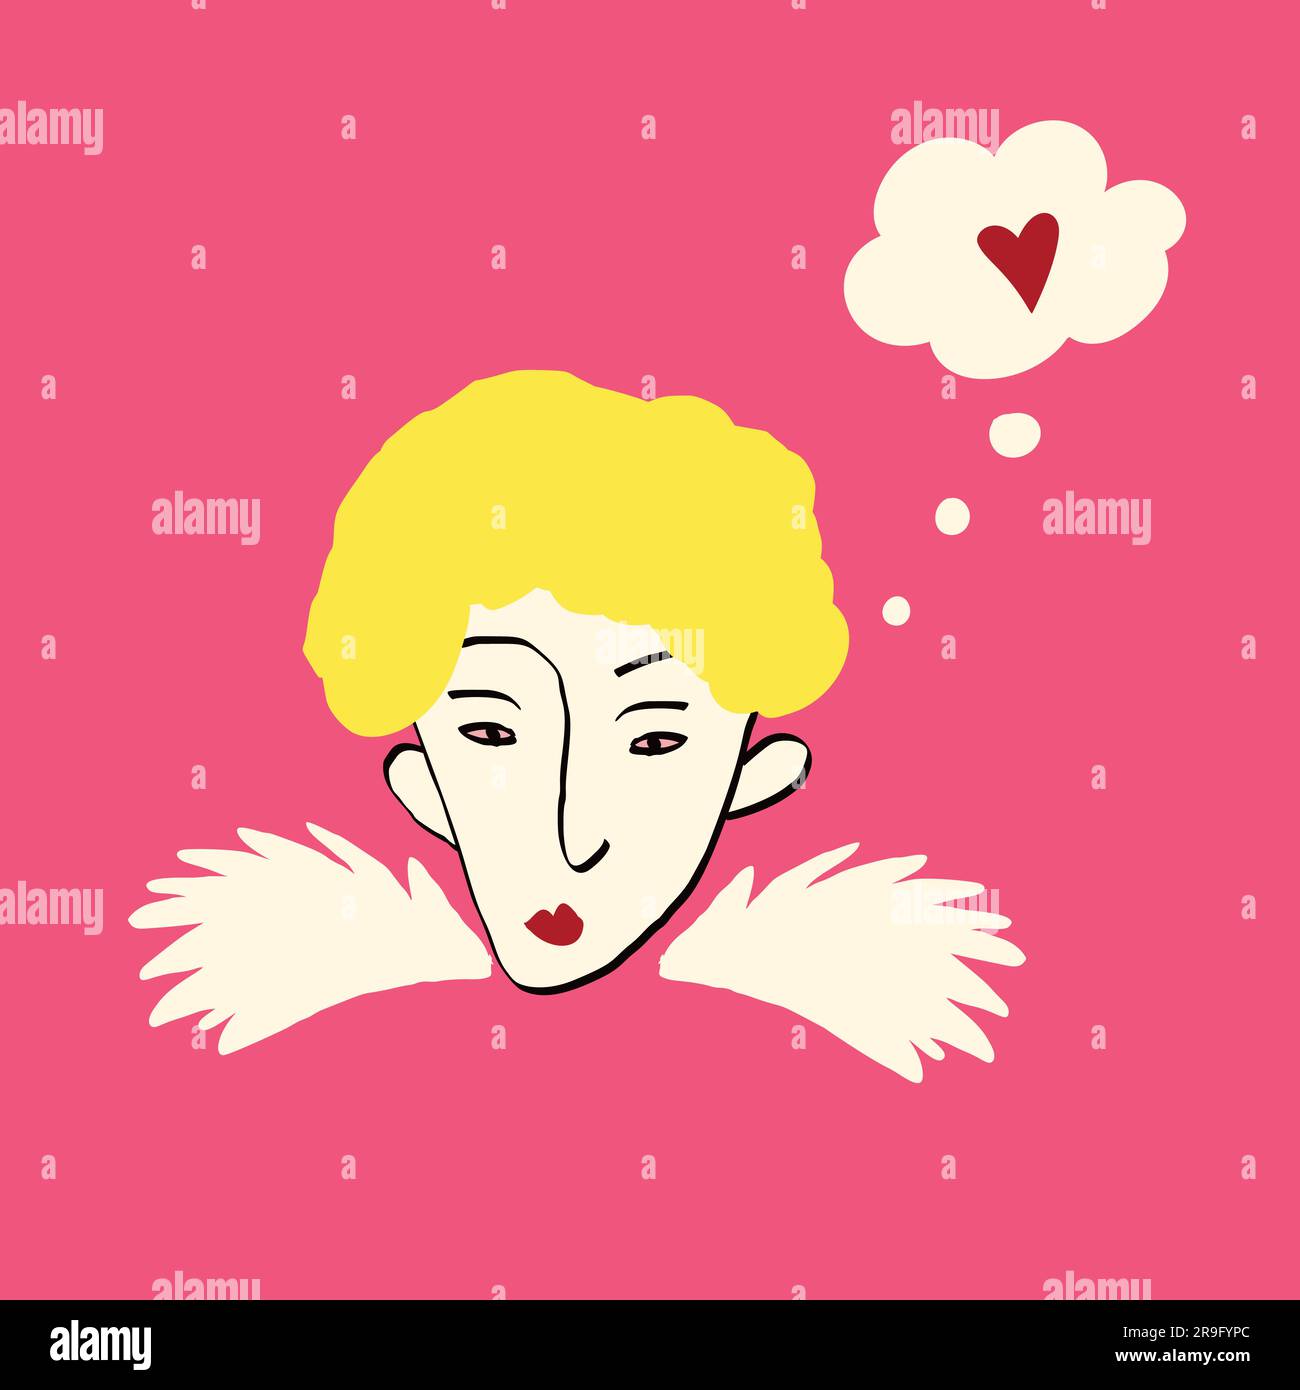 Süßer süßer Engel, der an Liebe denkt. Moderne, trendige Illustration zum Valentinstag Stock Vektor